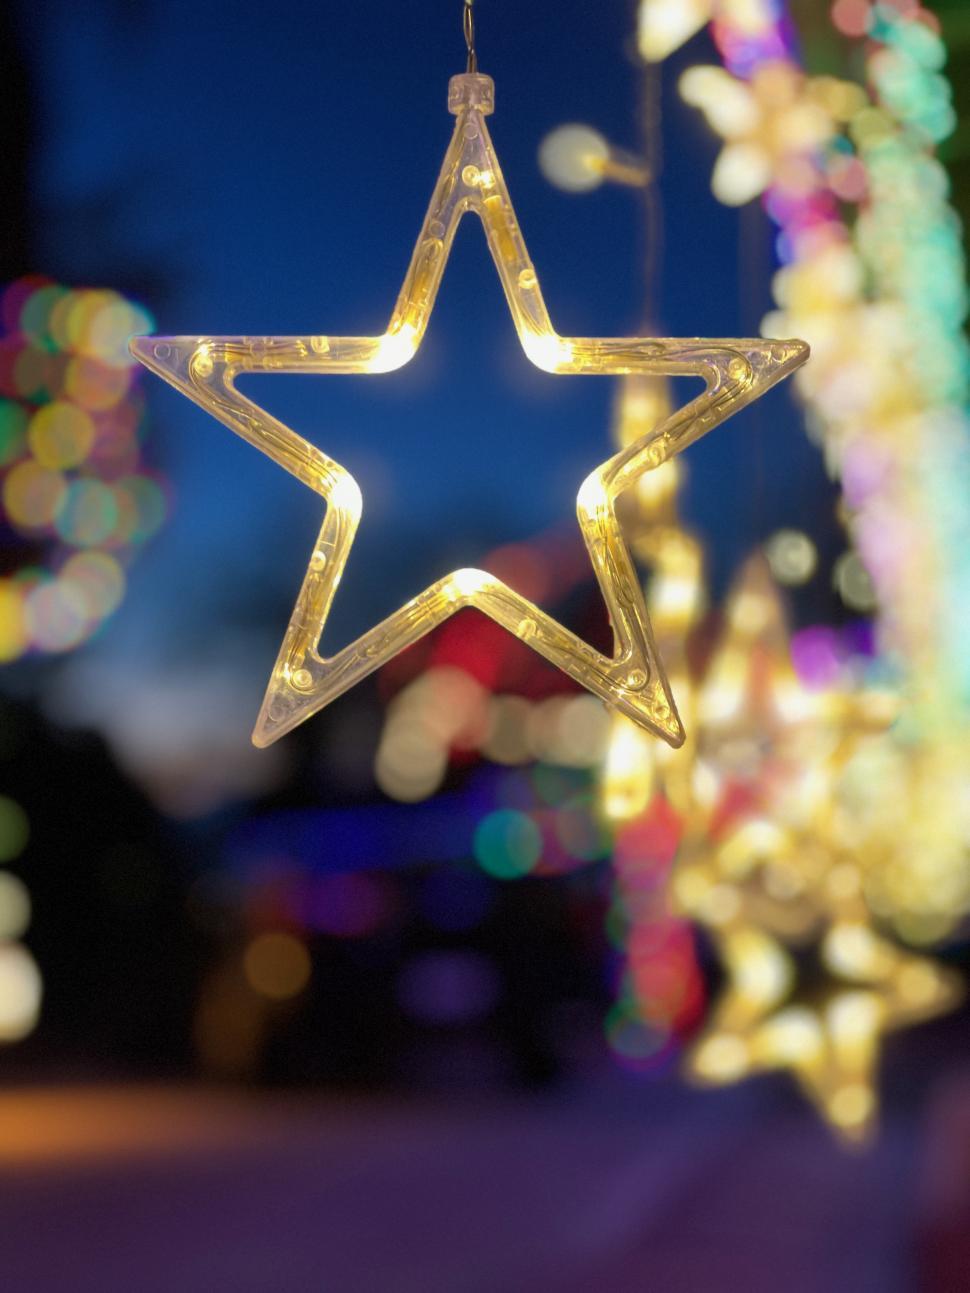 Free Image of Illuminated holiday star decoration at night 